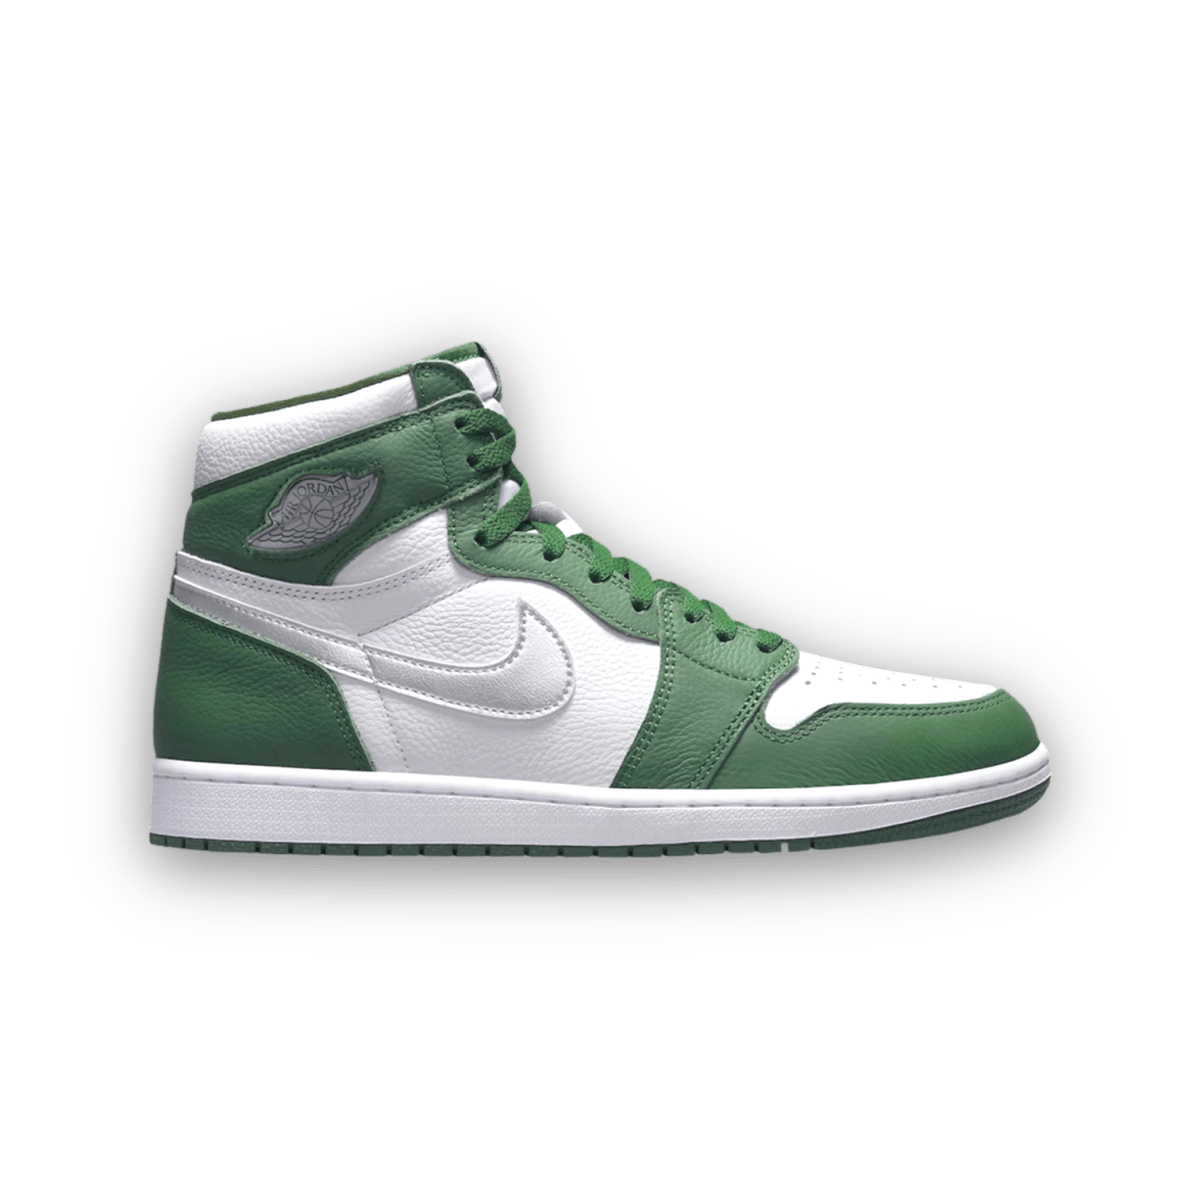 Air Jordan 1 Retro High OG 'Gorge Green' - High Sneaker - Jawns on Fire Sneakers & Streetwear